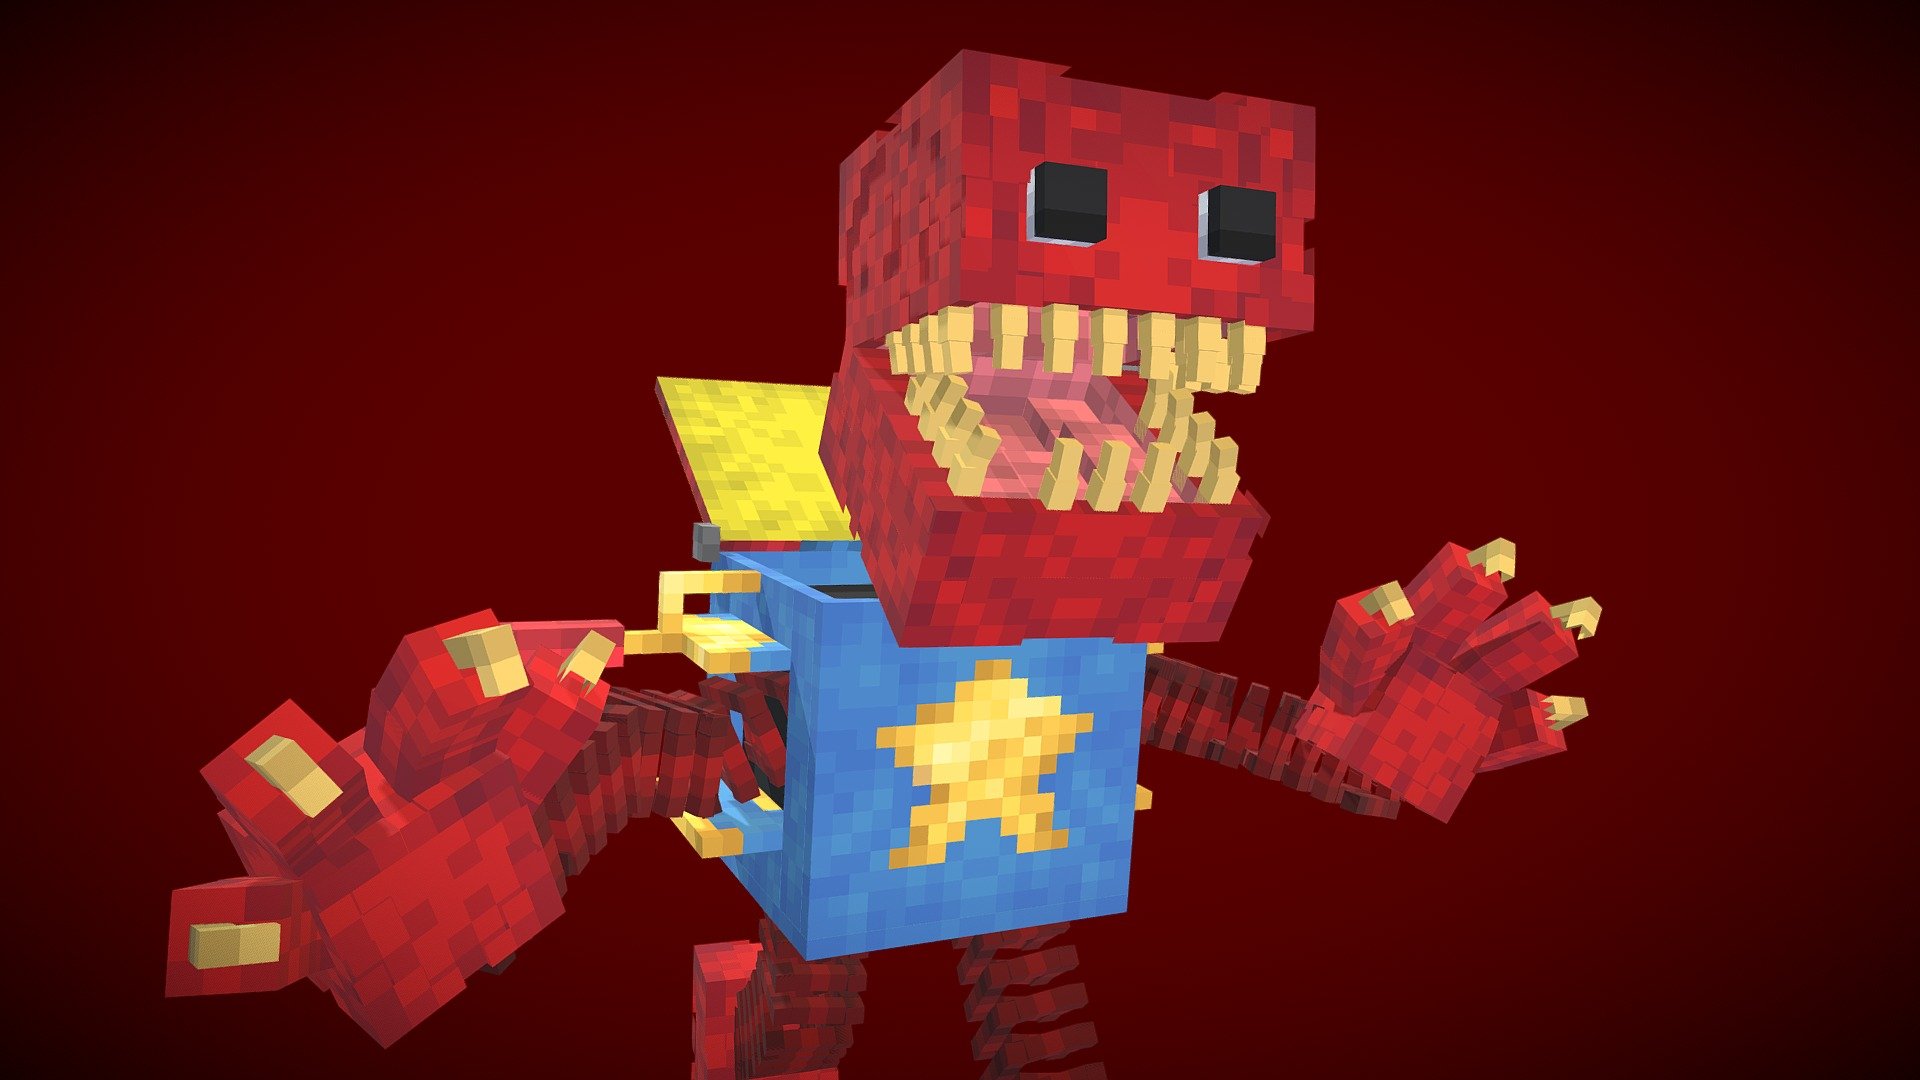 Boxy boo Minecraft Mob Skin